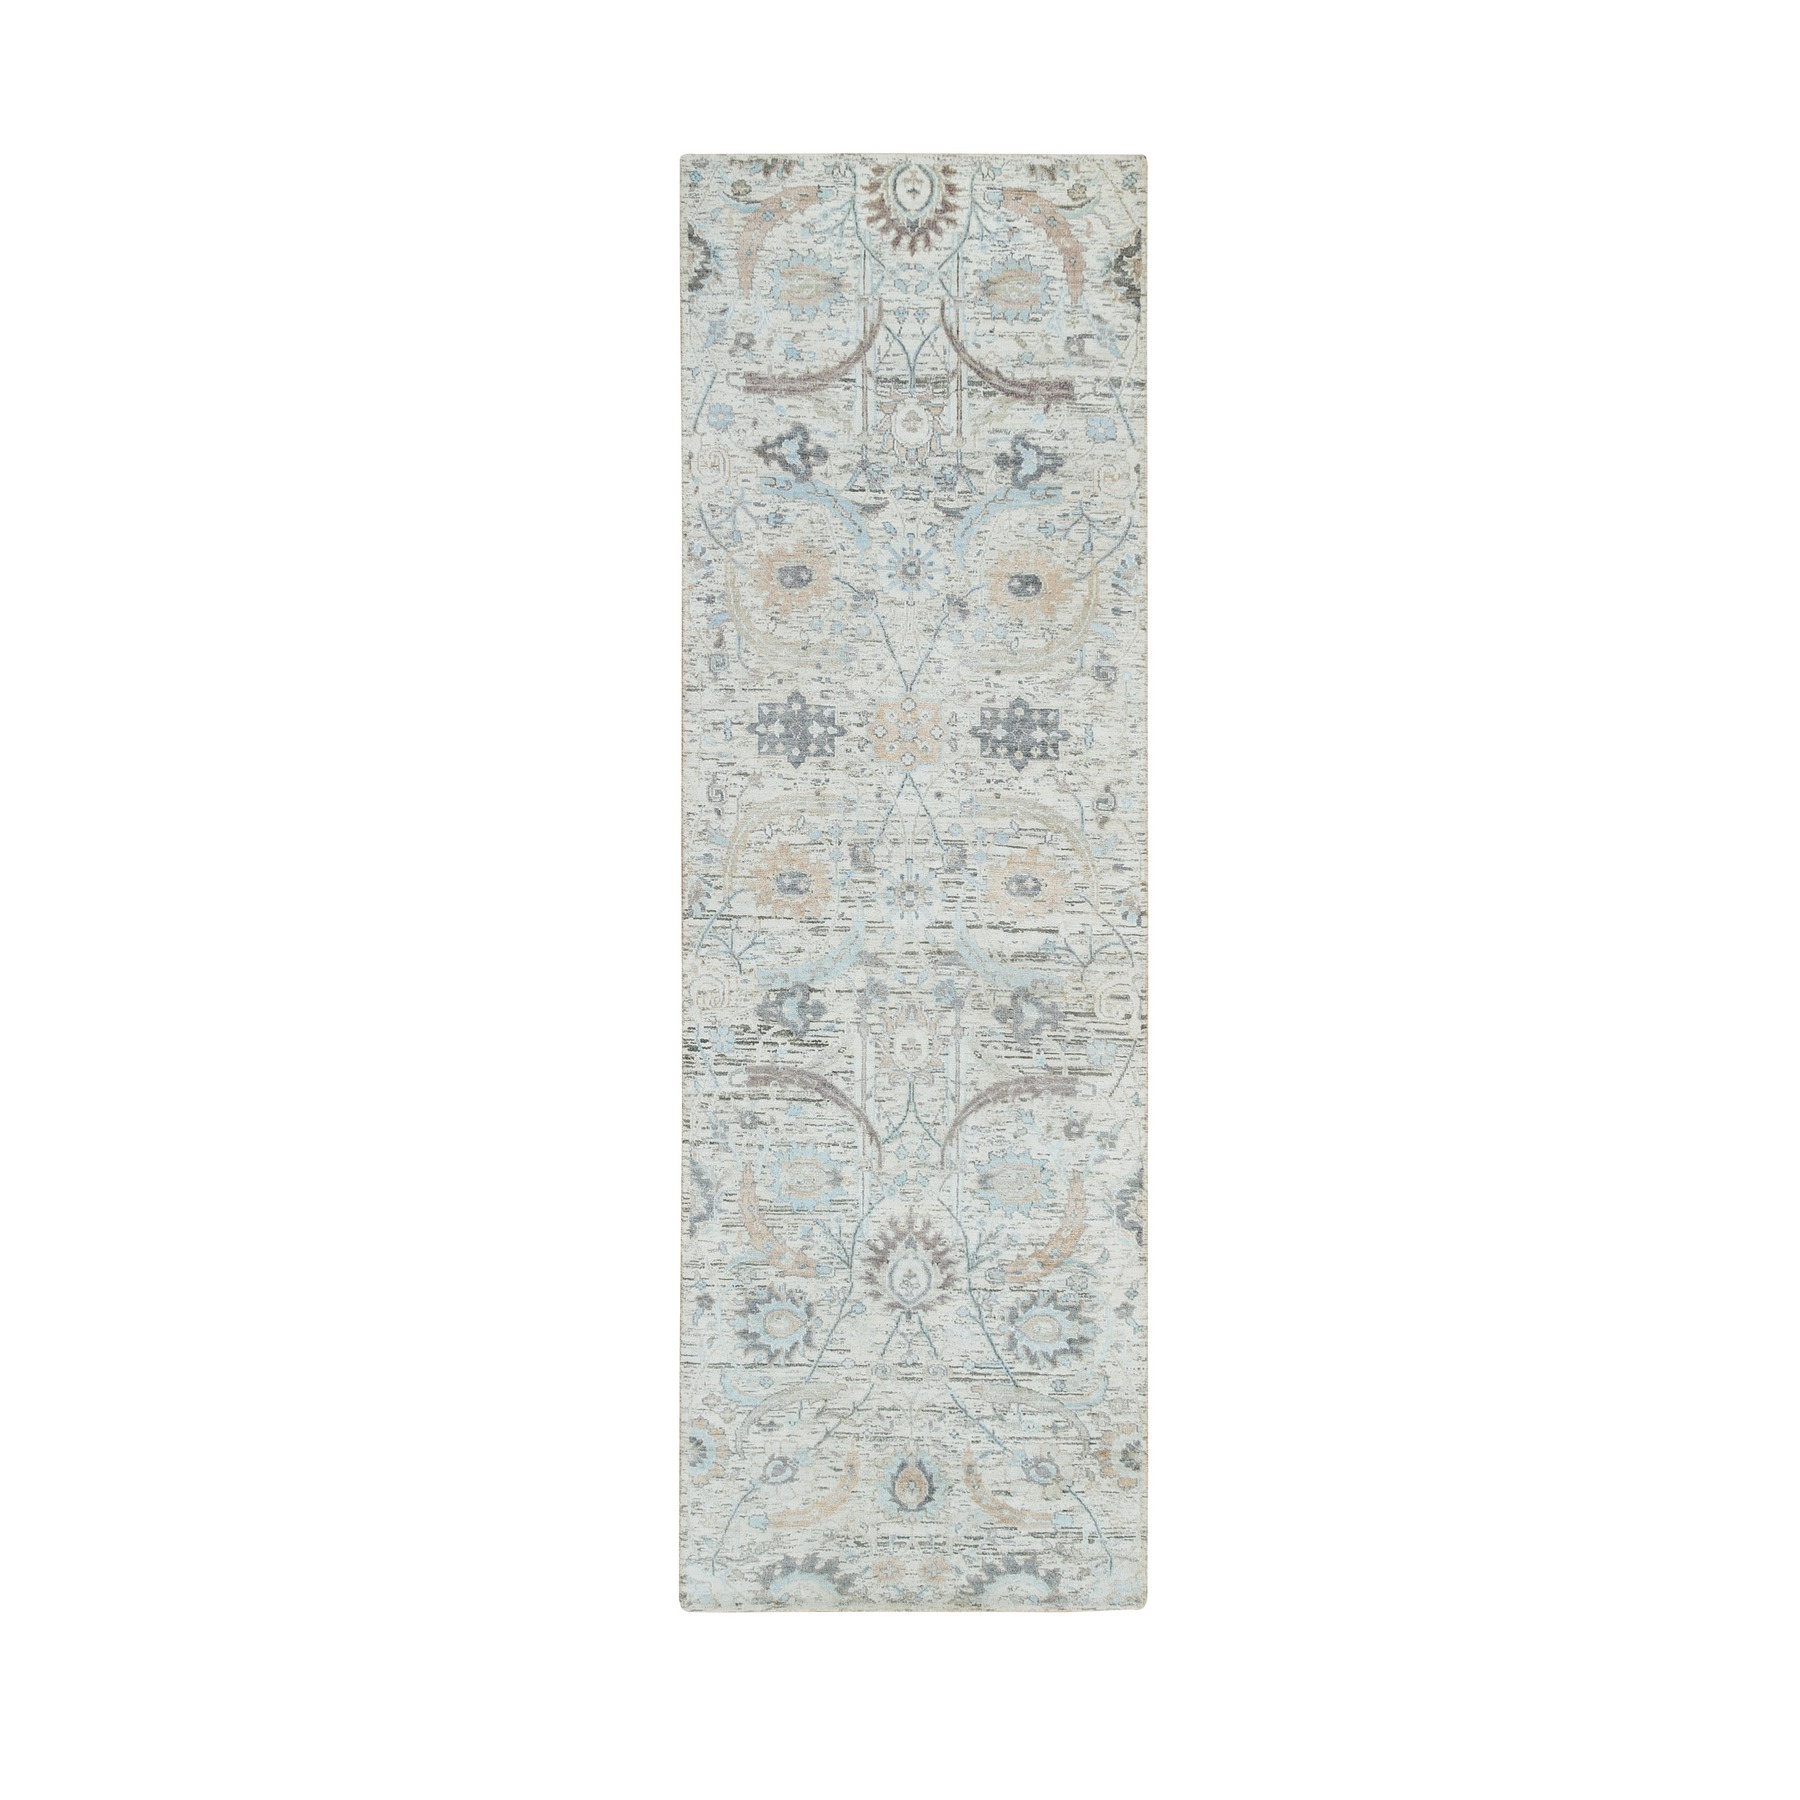 2'7"x8'2" Ivory, Silk With Textured Wool Hand Woven, Sickle Leaf Design Soft Pile, Runner Oriental Rug 